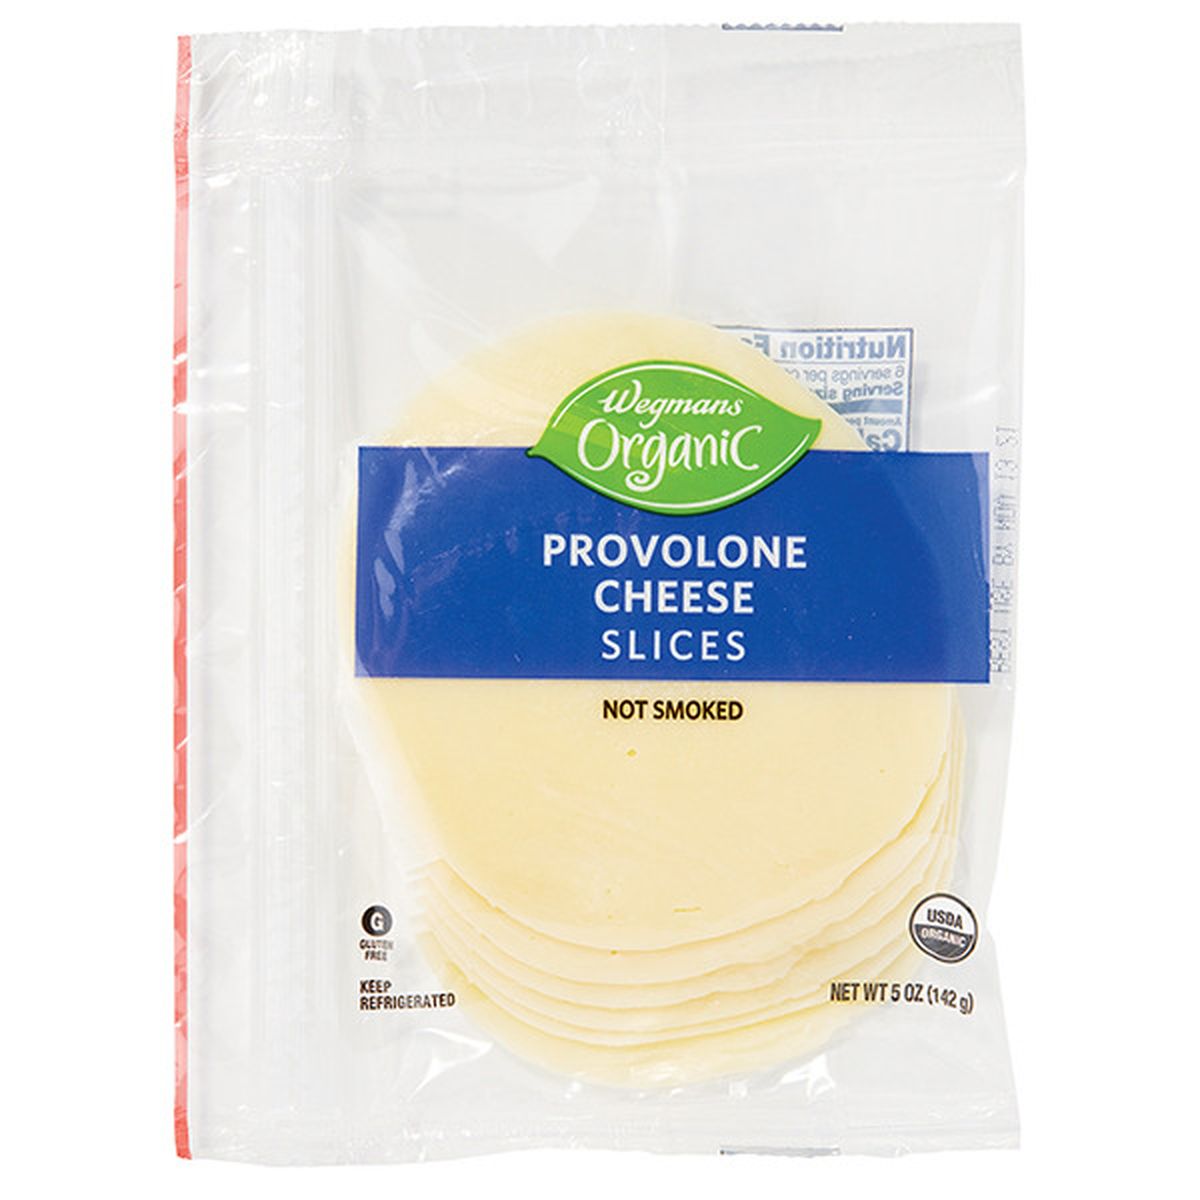 Calories in Wegmans Organic Provolone Cheese, Sliced